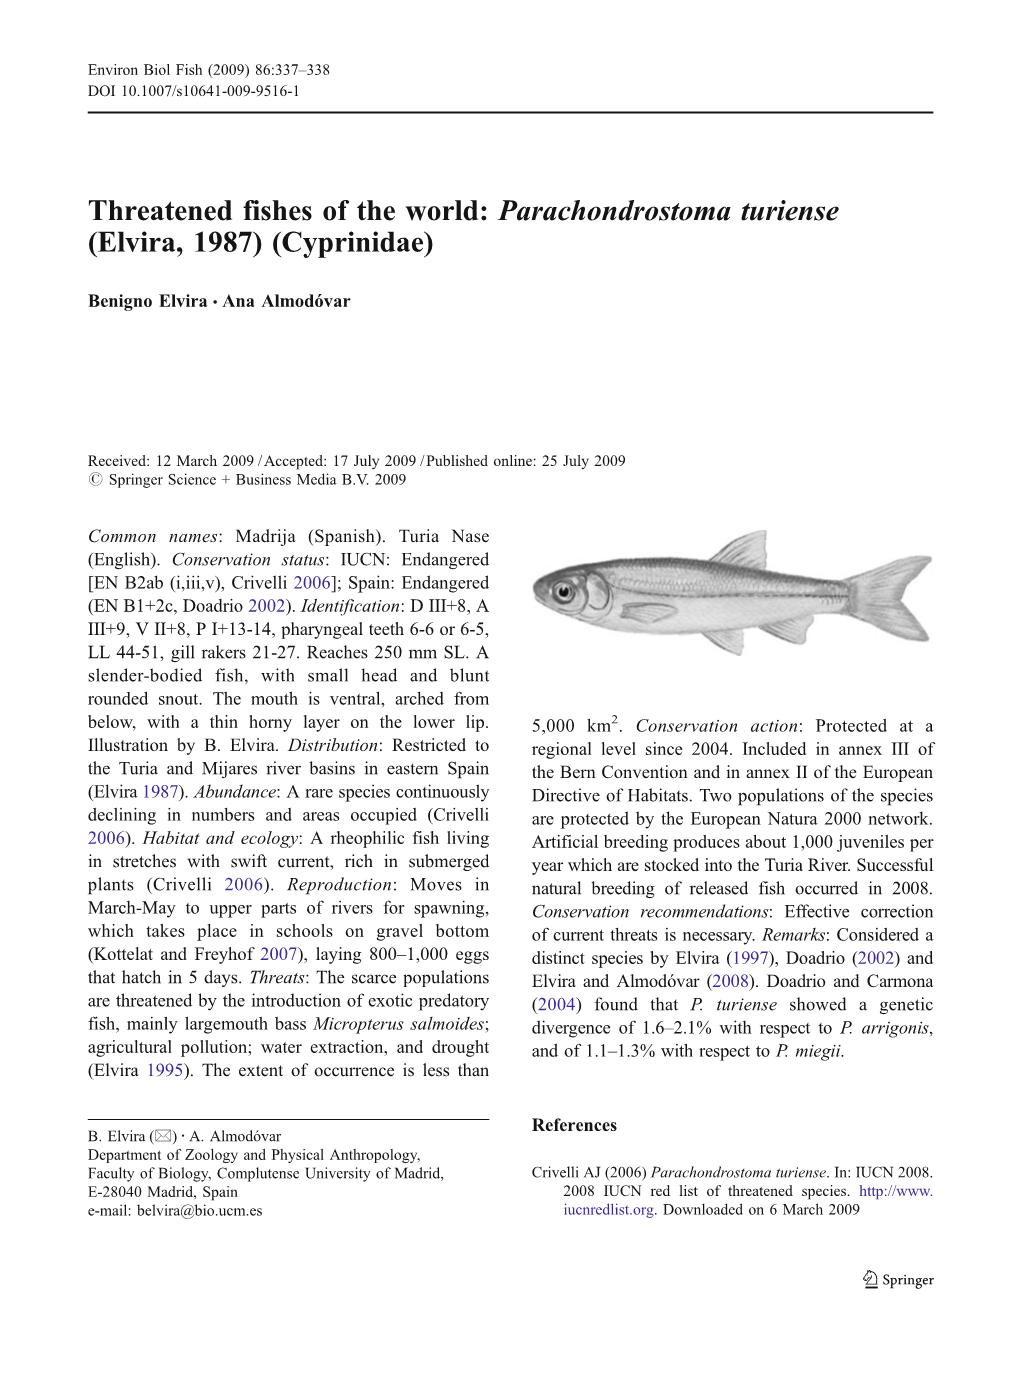 Threatened Fishes of the World: Parachondrostoma Turiense (Elvira, 1987) (Cyprinidae)